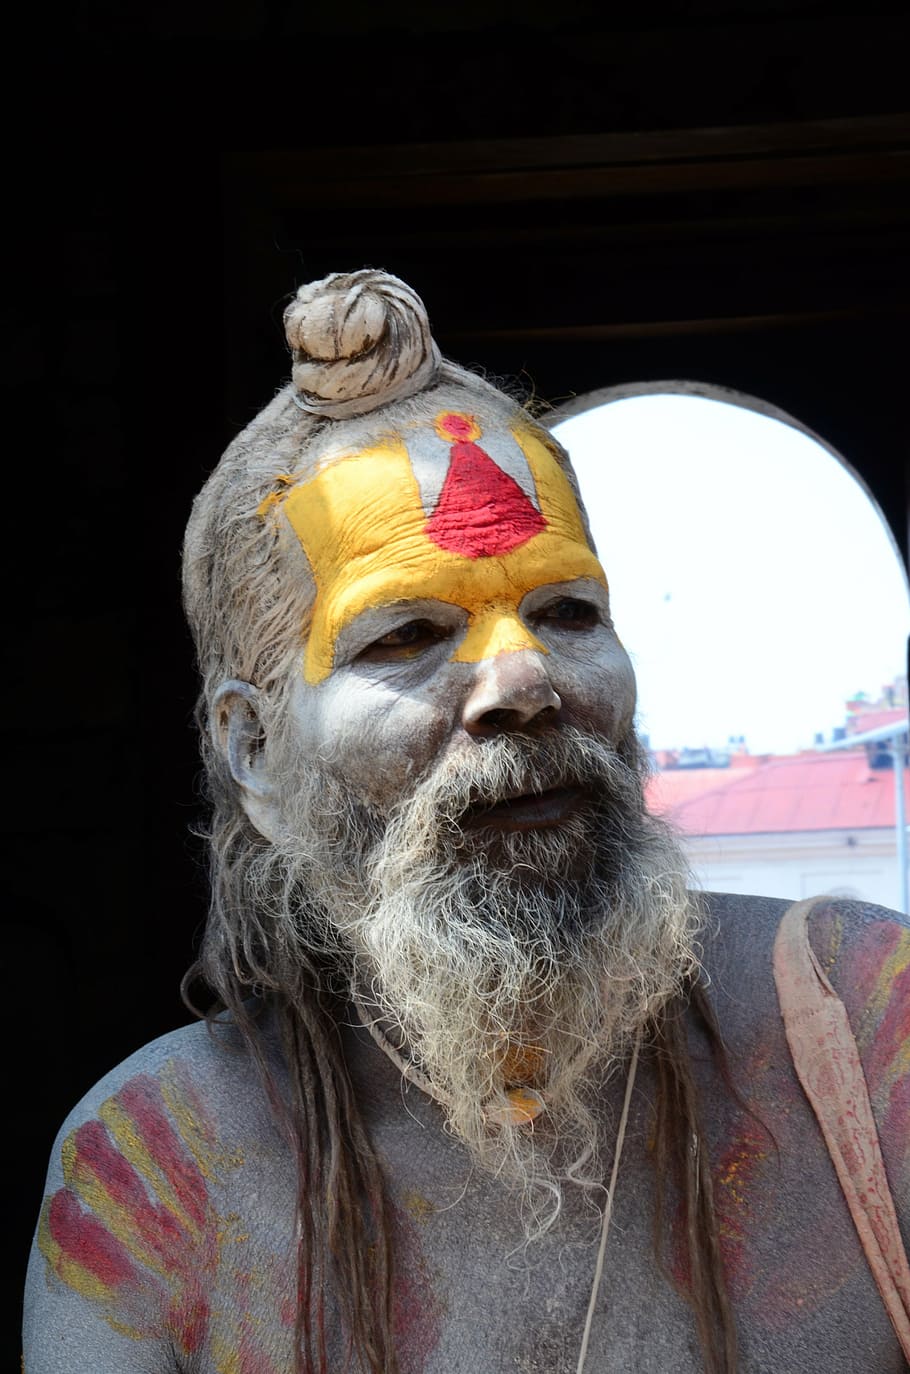 man, yellow, red, painted, face portrait photo, nepal, holy, old man, sadhu, beard